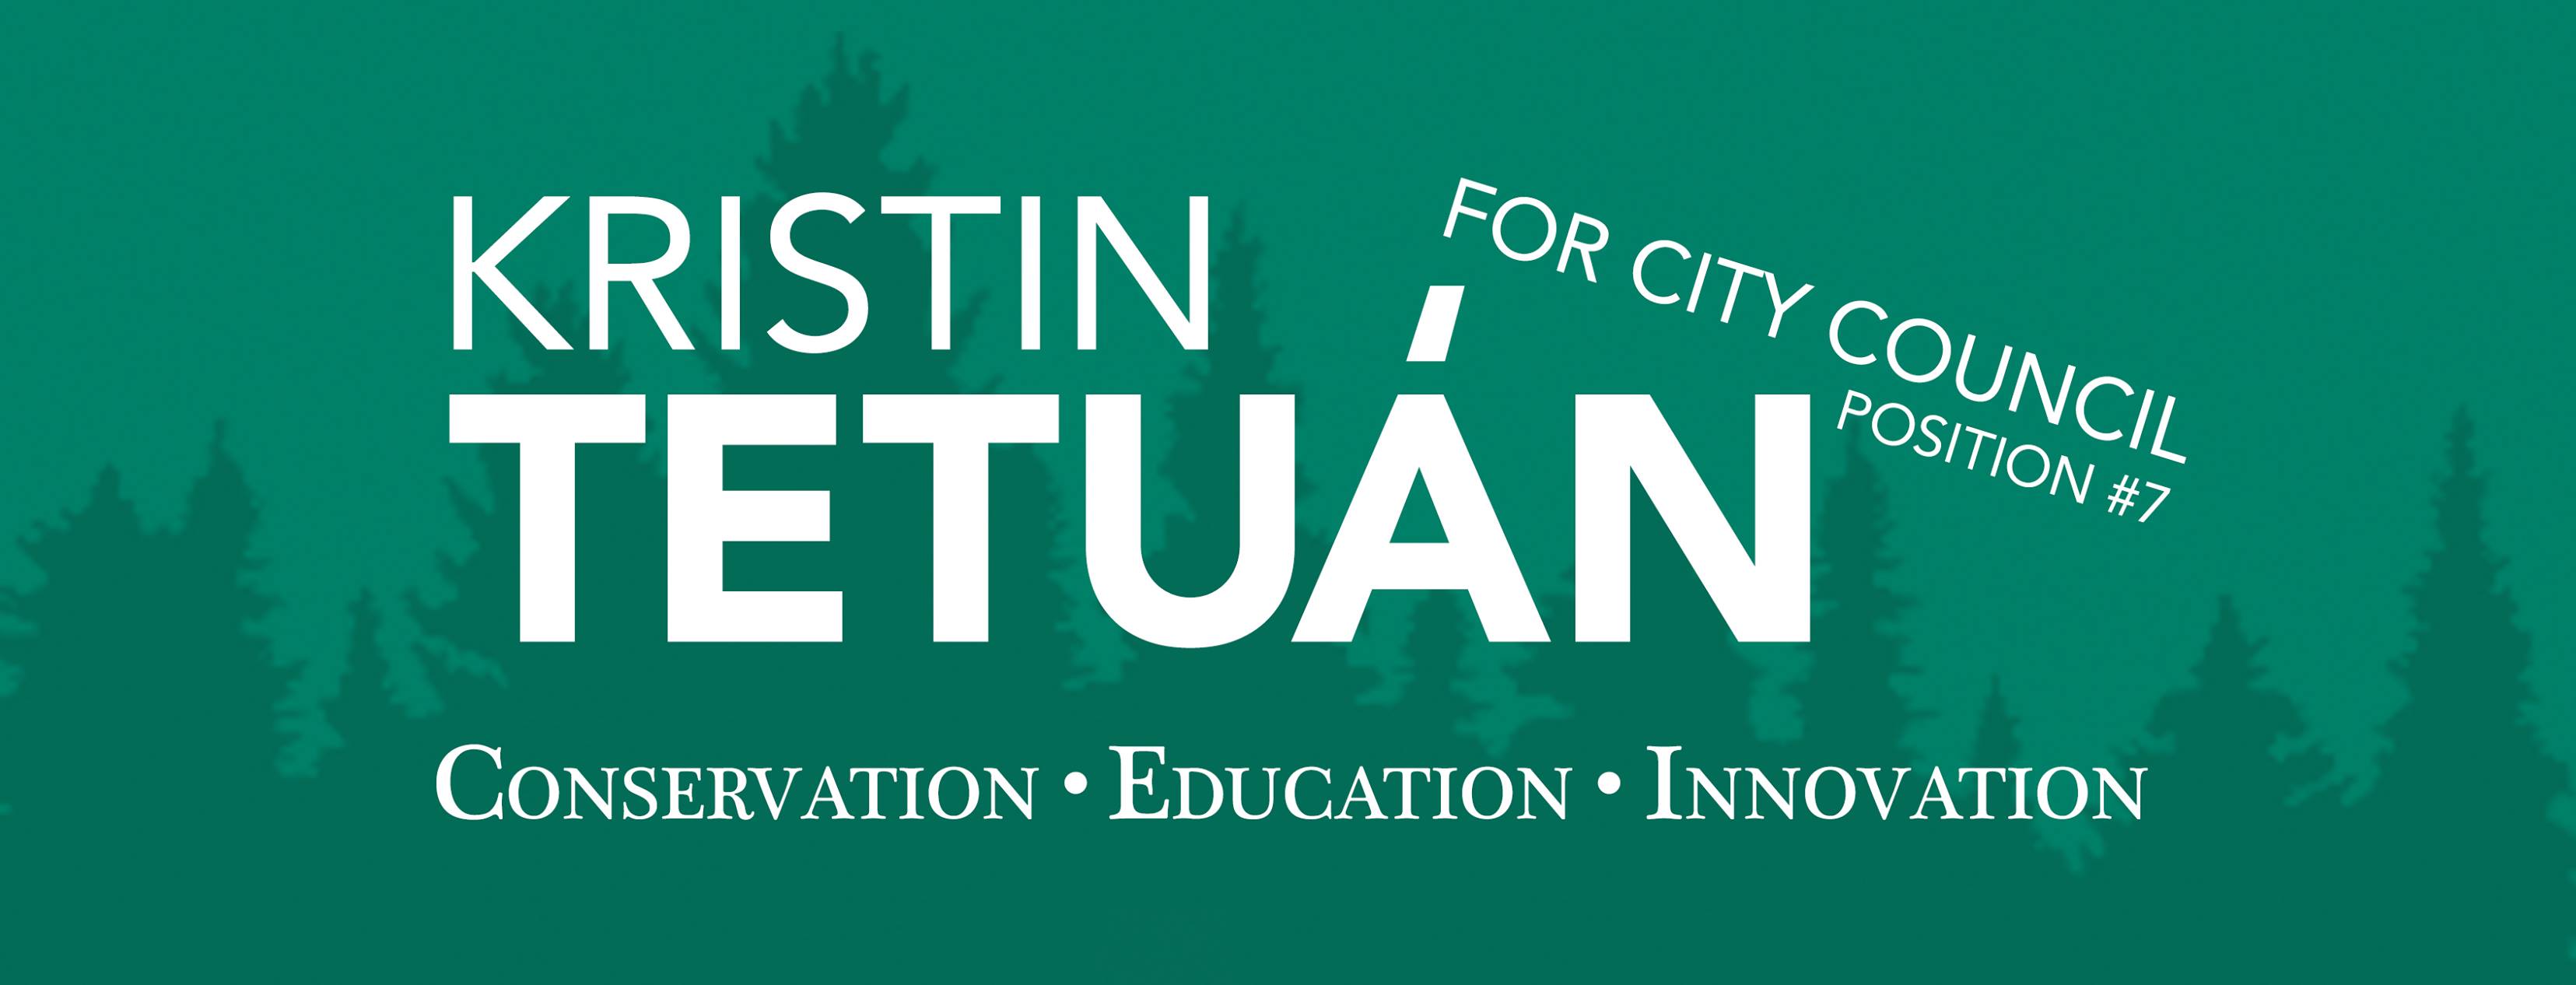 Kristin Tetuan for Council logo